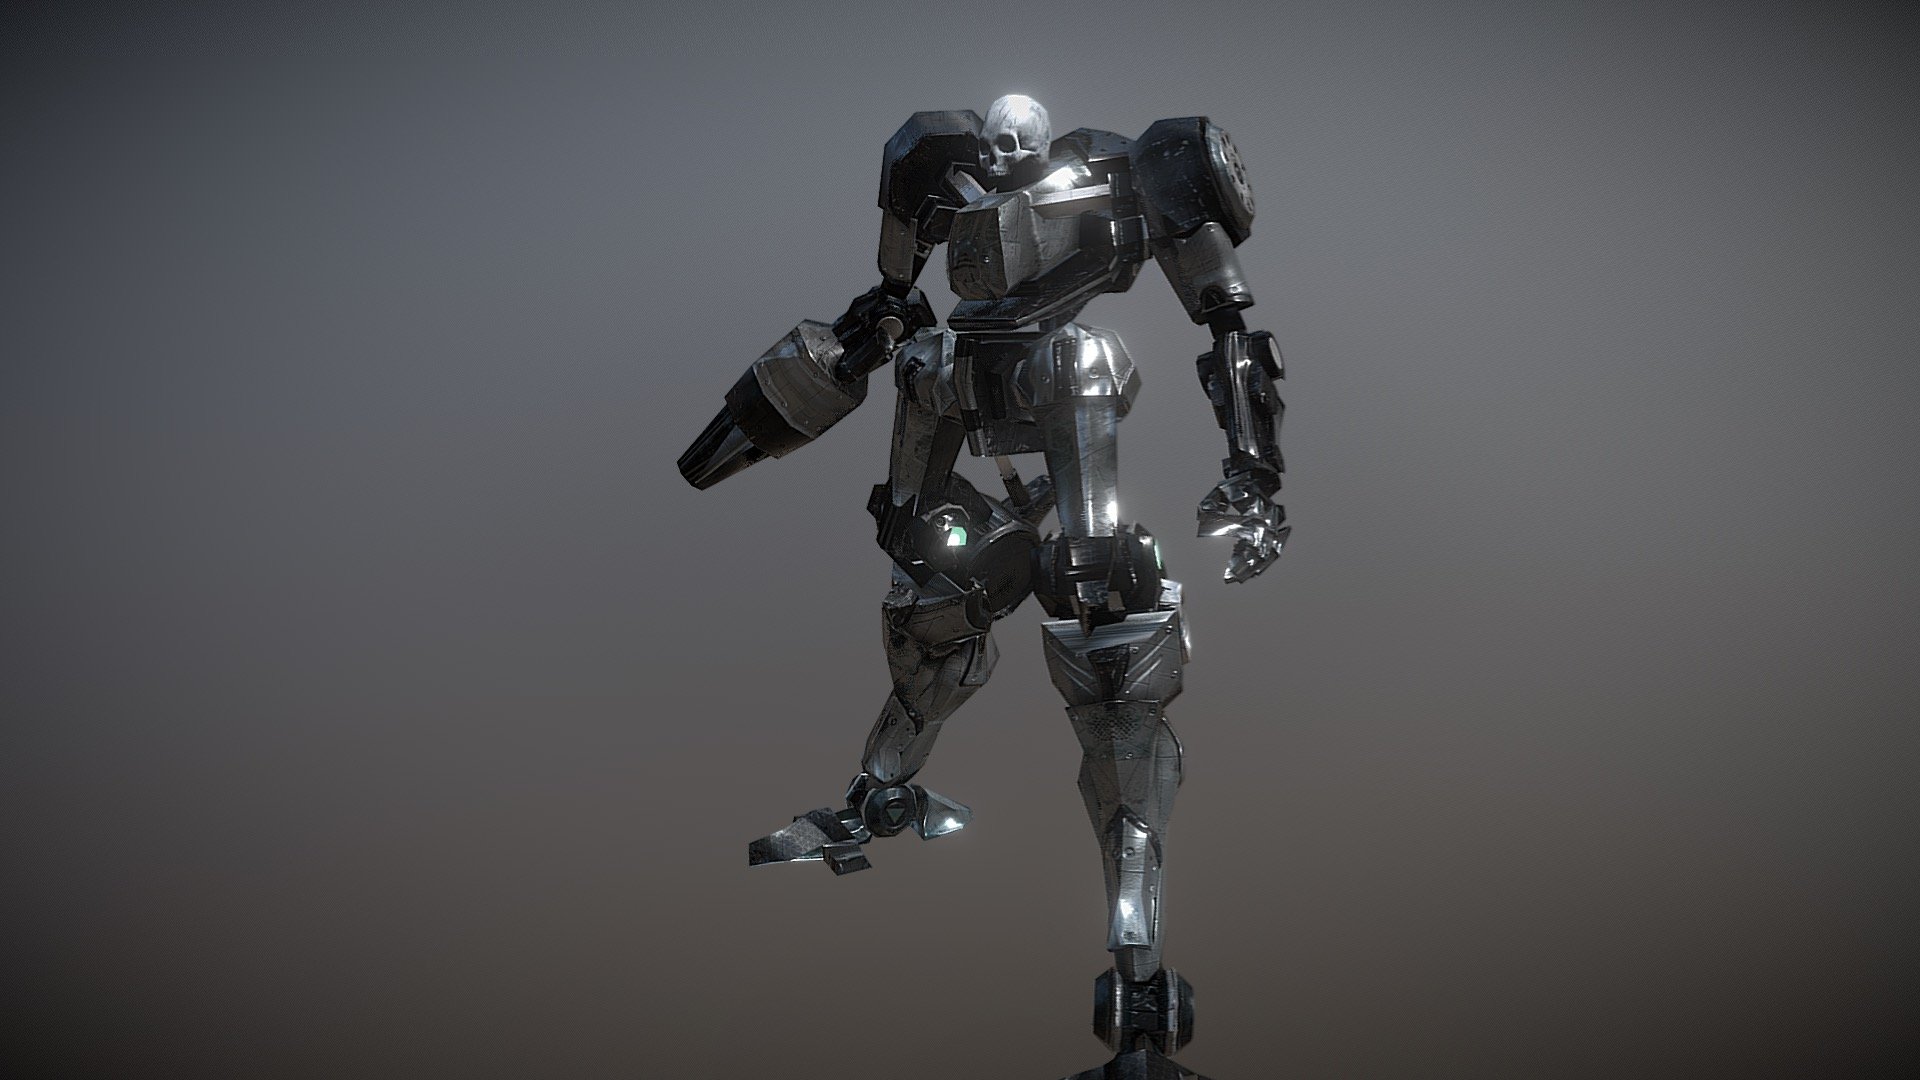 Game ready character - Robot Warrior - Buy Royalty Free 3D model by Dexsoft Games (@dexsoft-games) 3d model